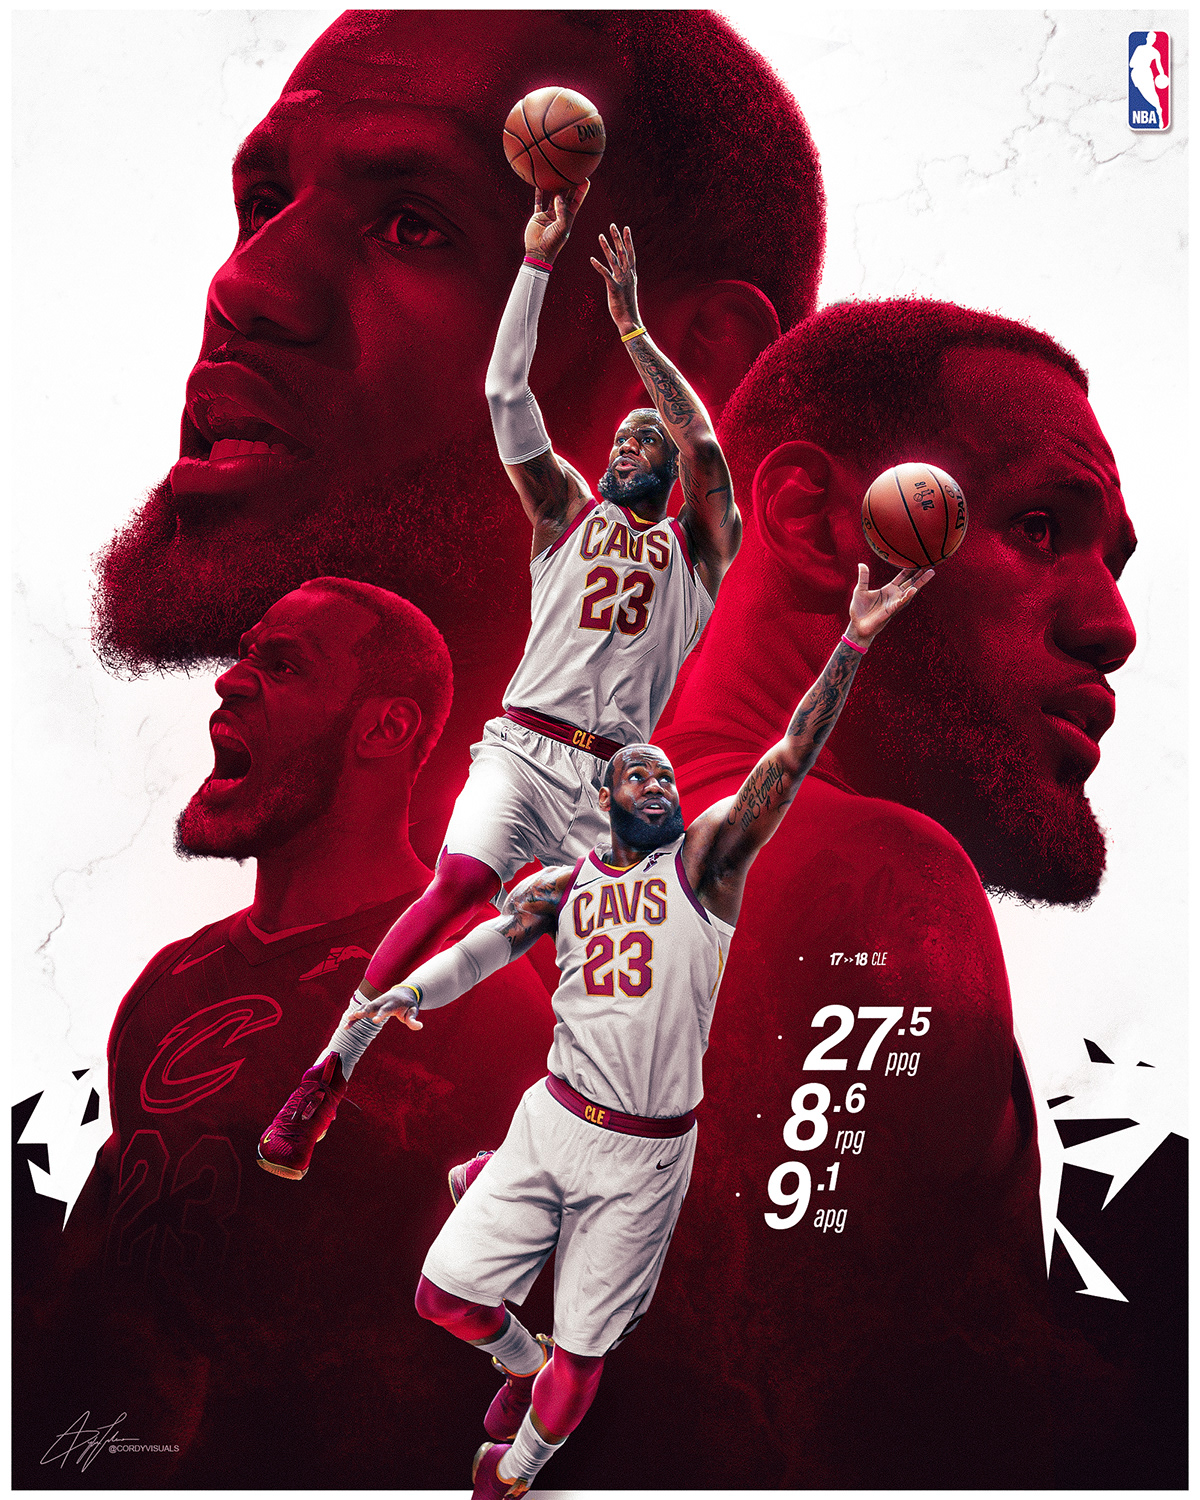 sportsgraphics SportsDesign SMSports designportfolio Poster Design NBA NBA Art NBA design